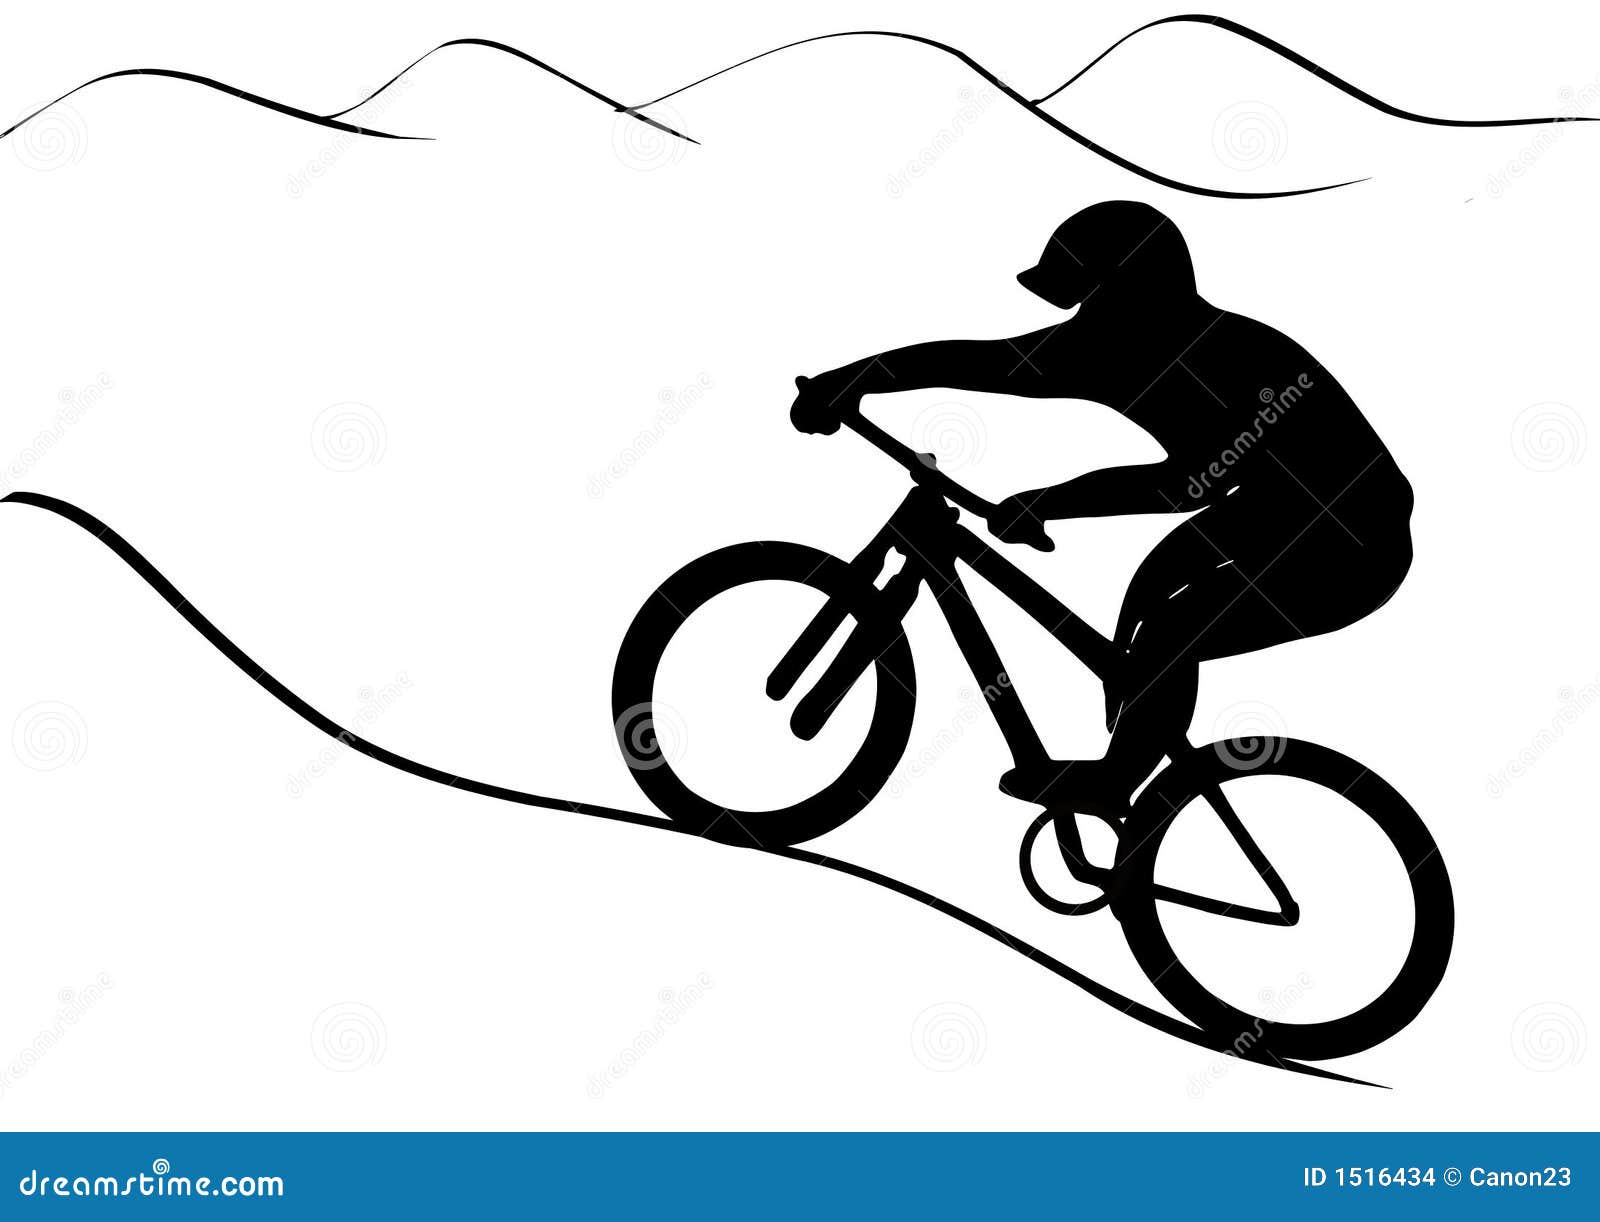 mountain bike clip art silhouette - photo #26